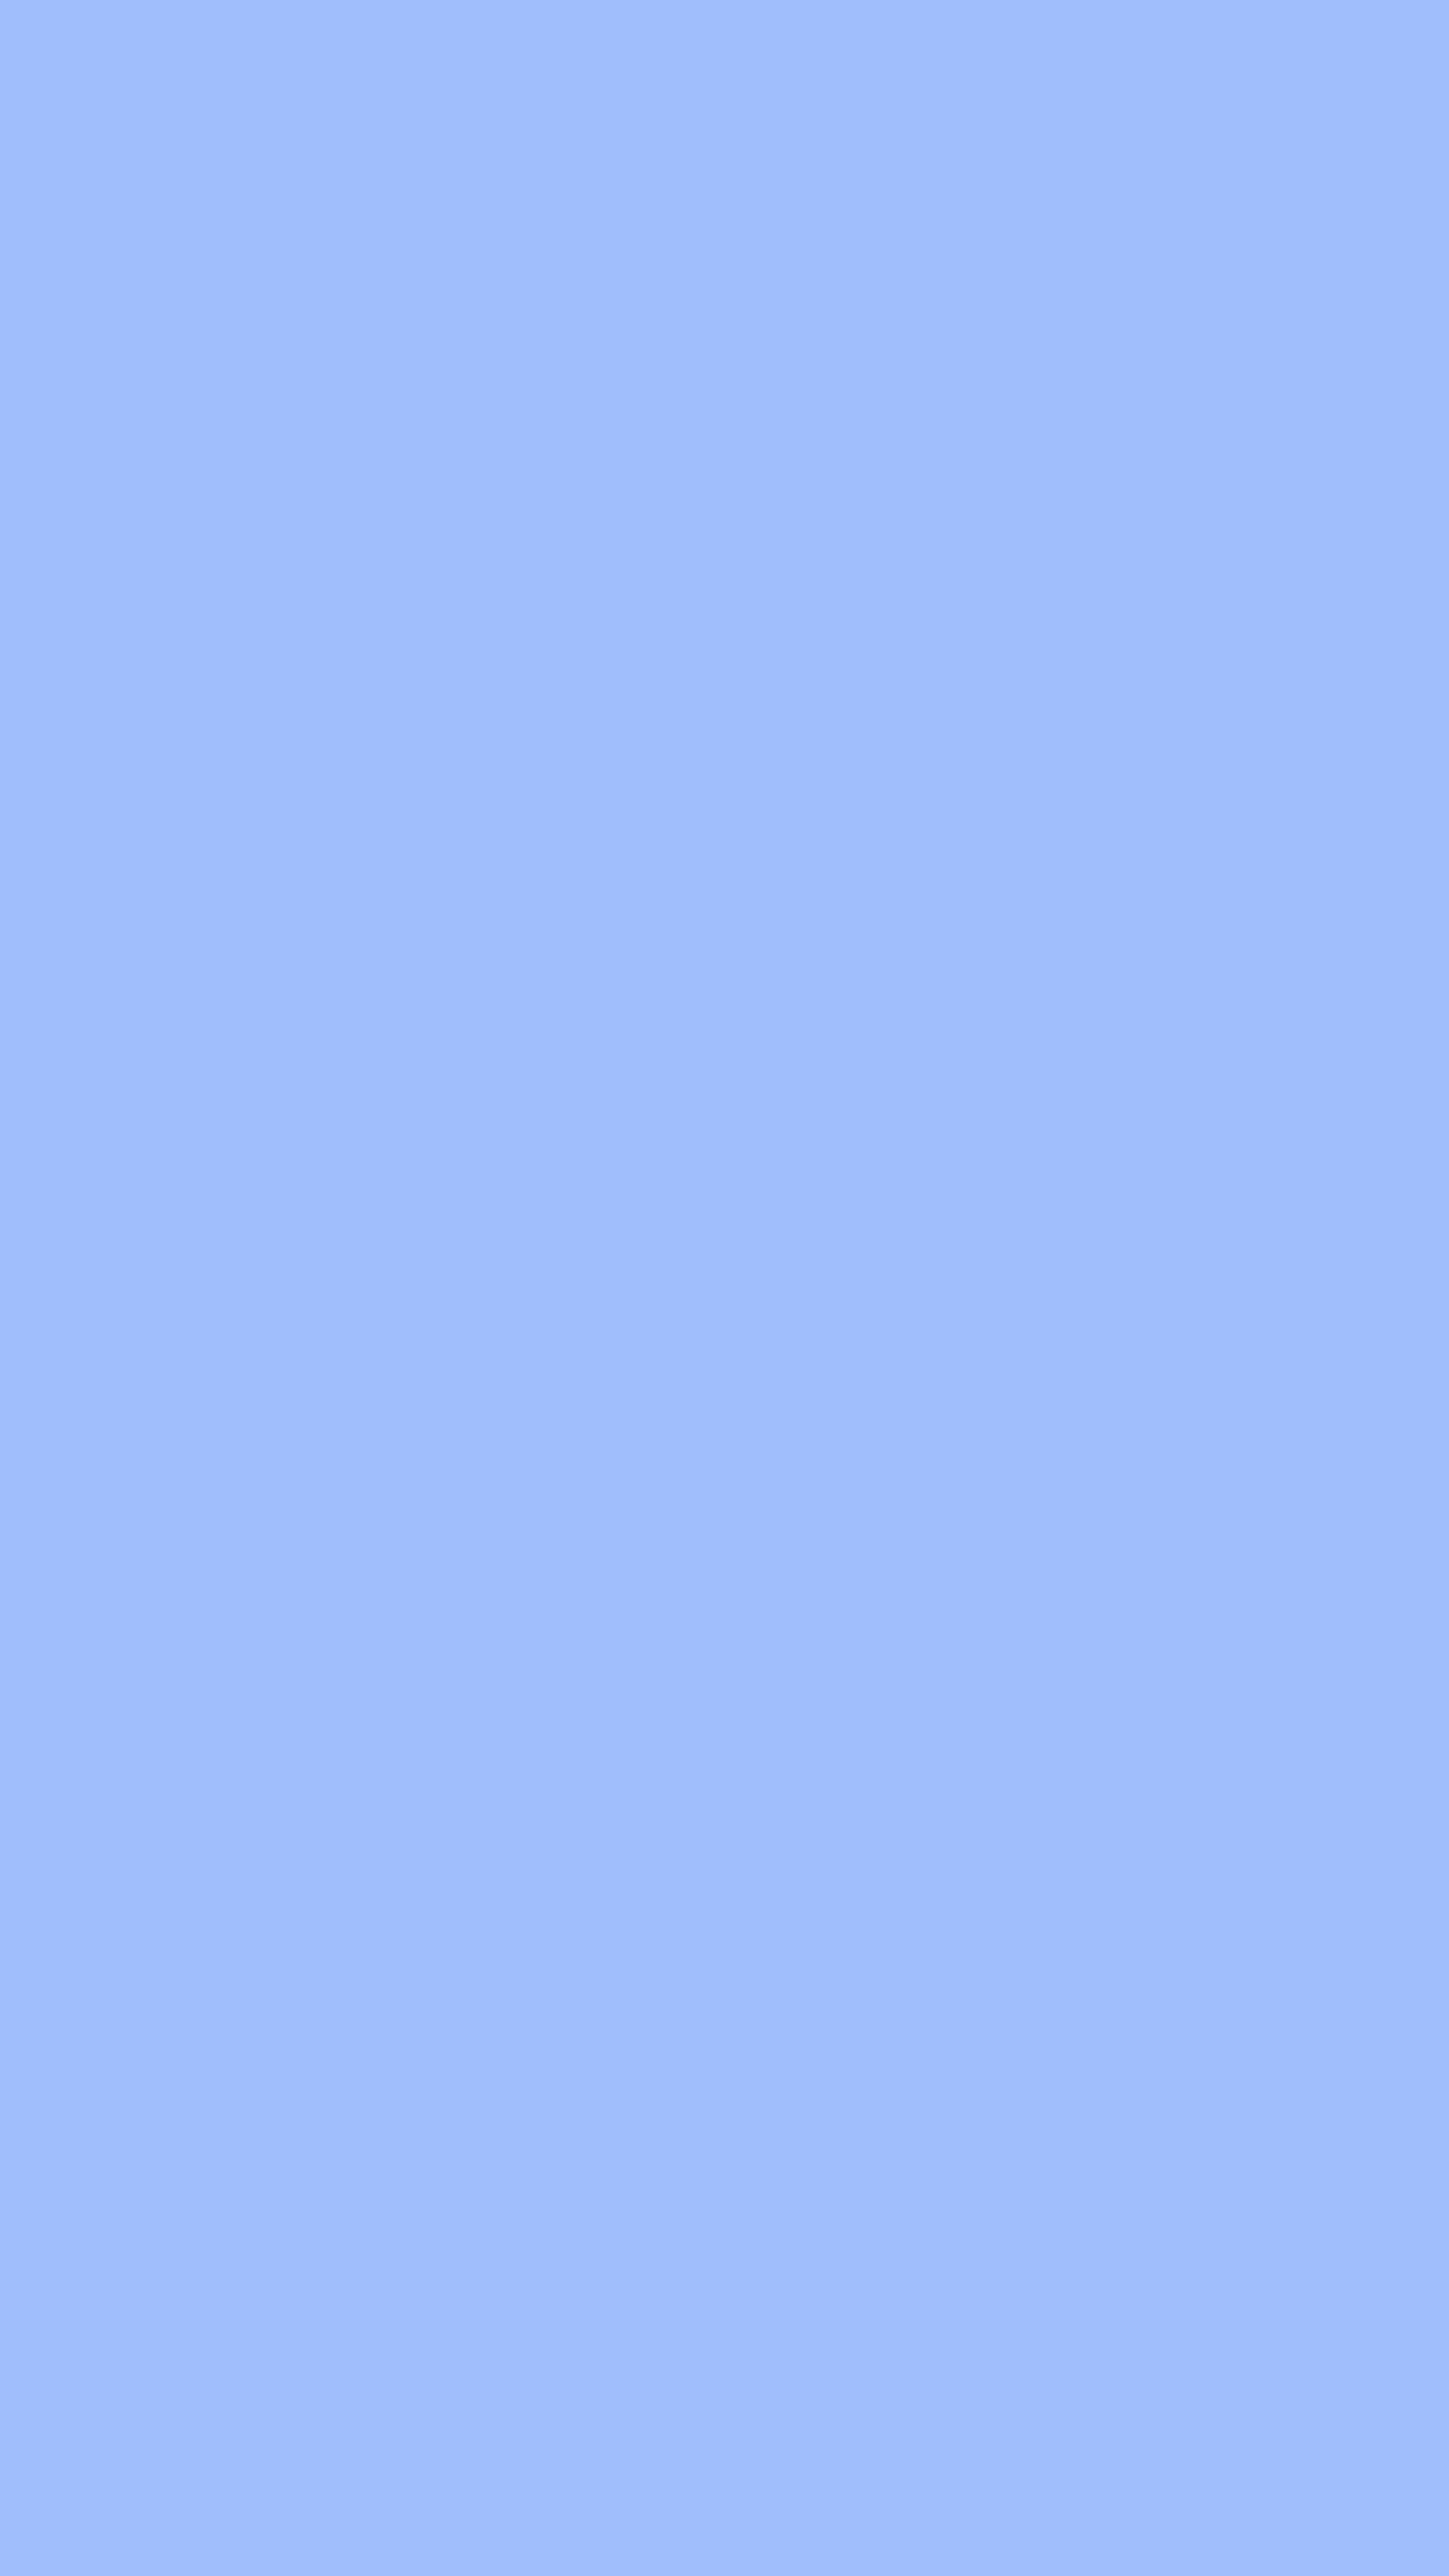 Bright Blue Sky Simple Background Tapeta na zeď[10c3cea591d2440c9e7c]